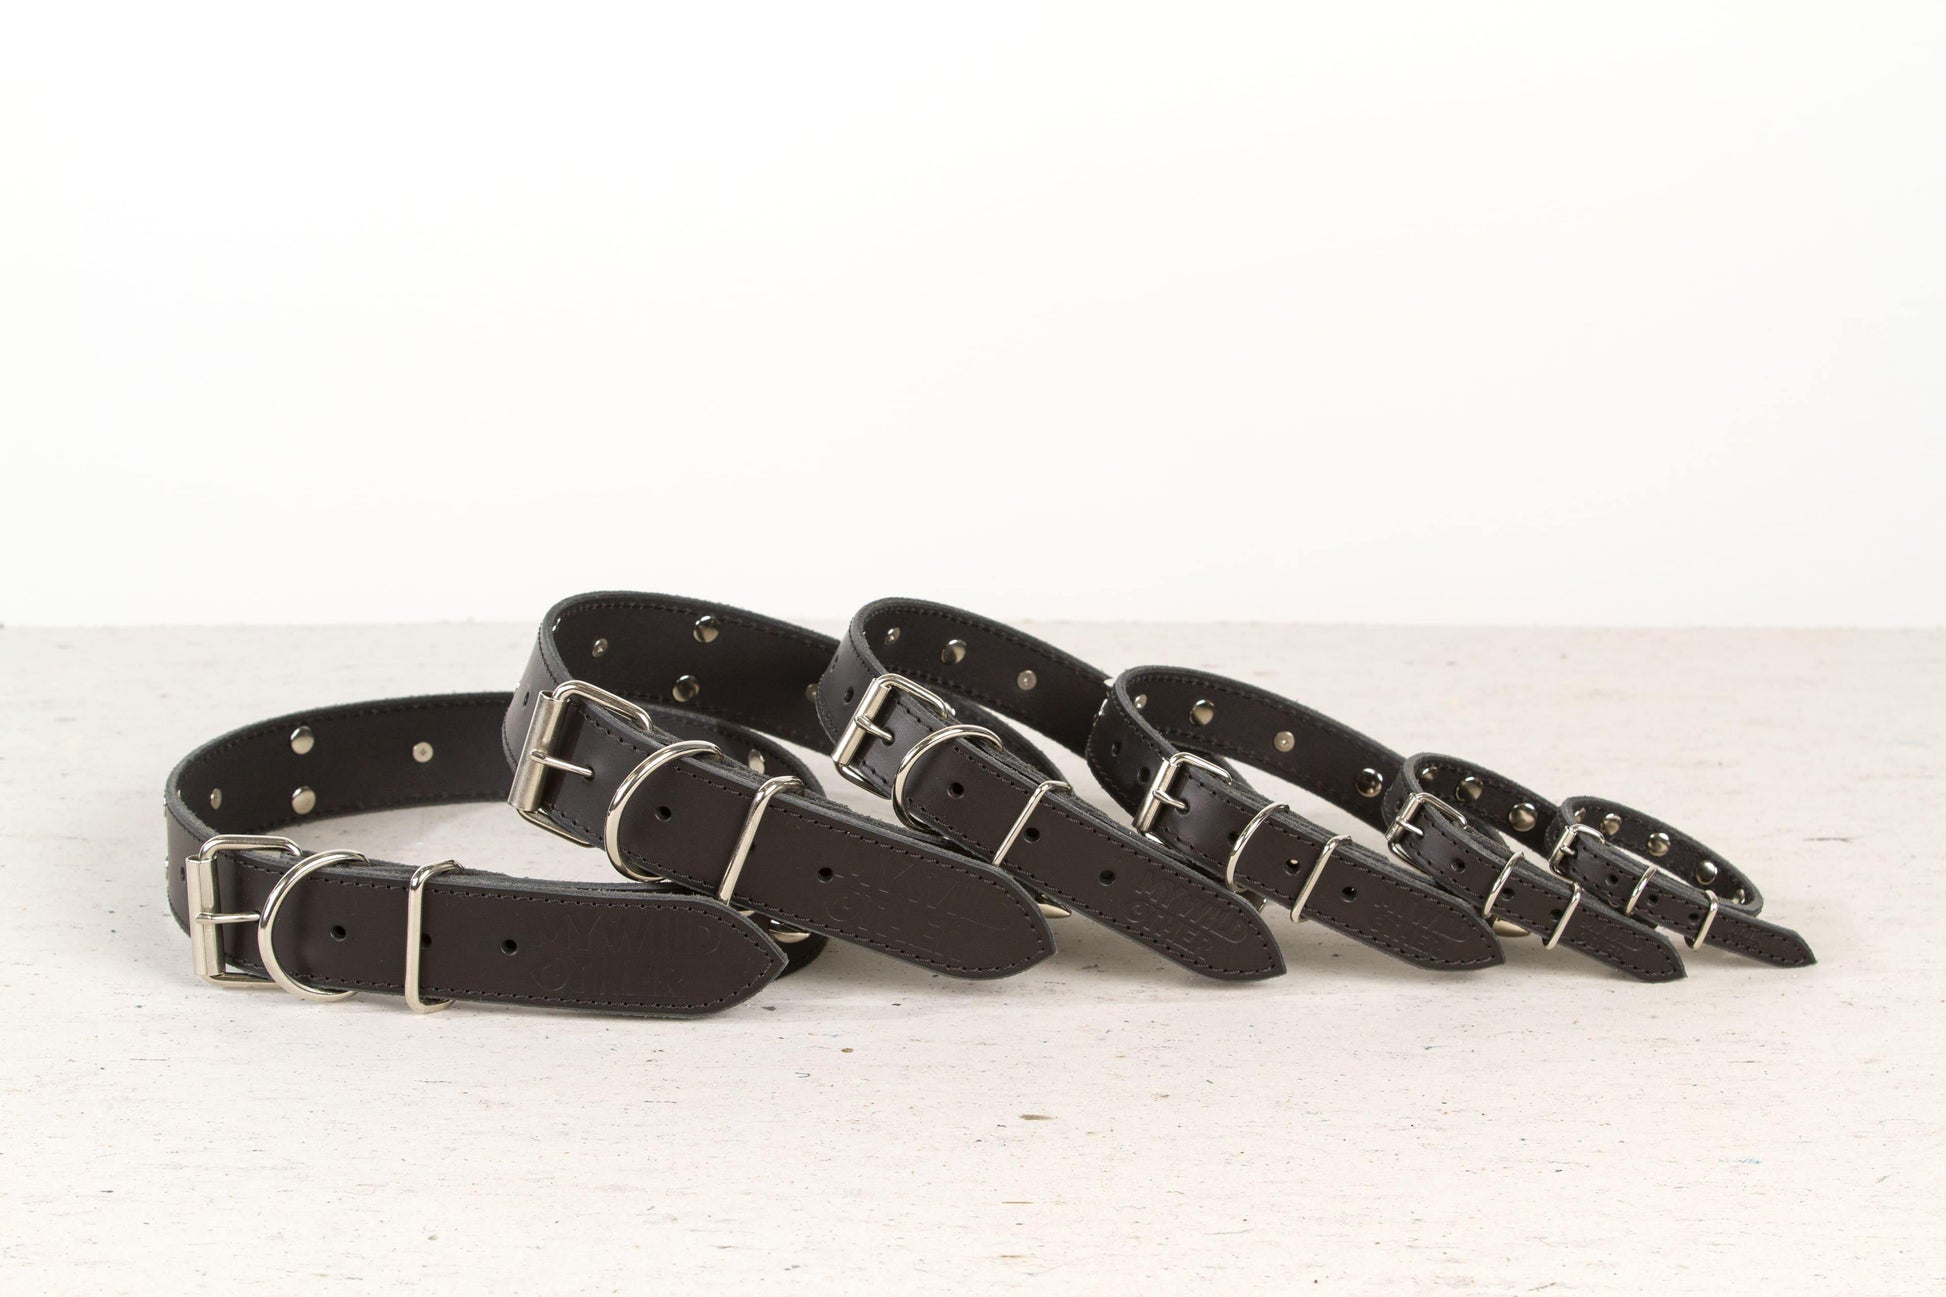 Handmade black leather STUDDED dog collar - European handmade dog accessories by My Wild Other